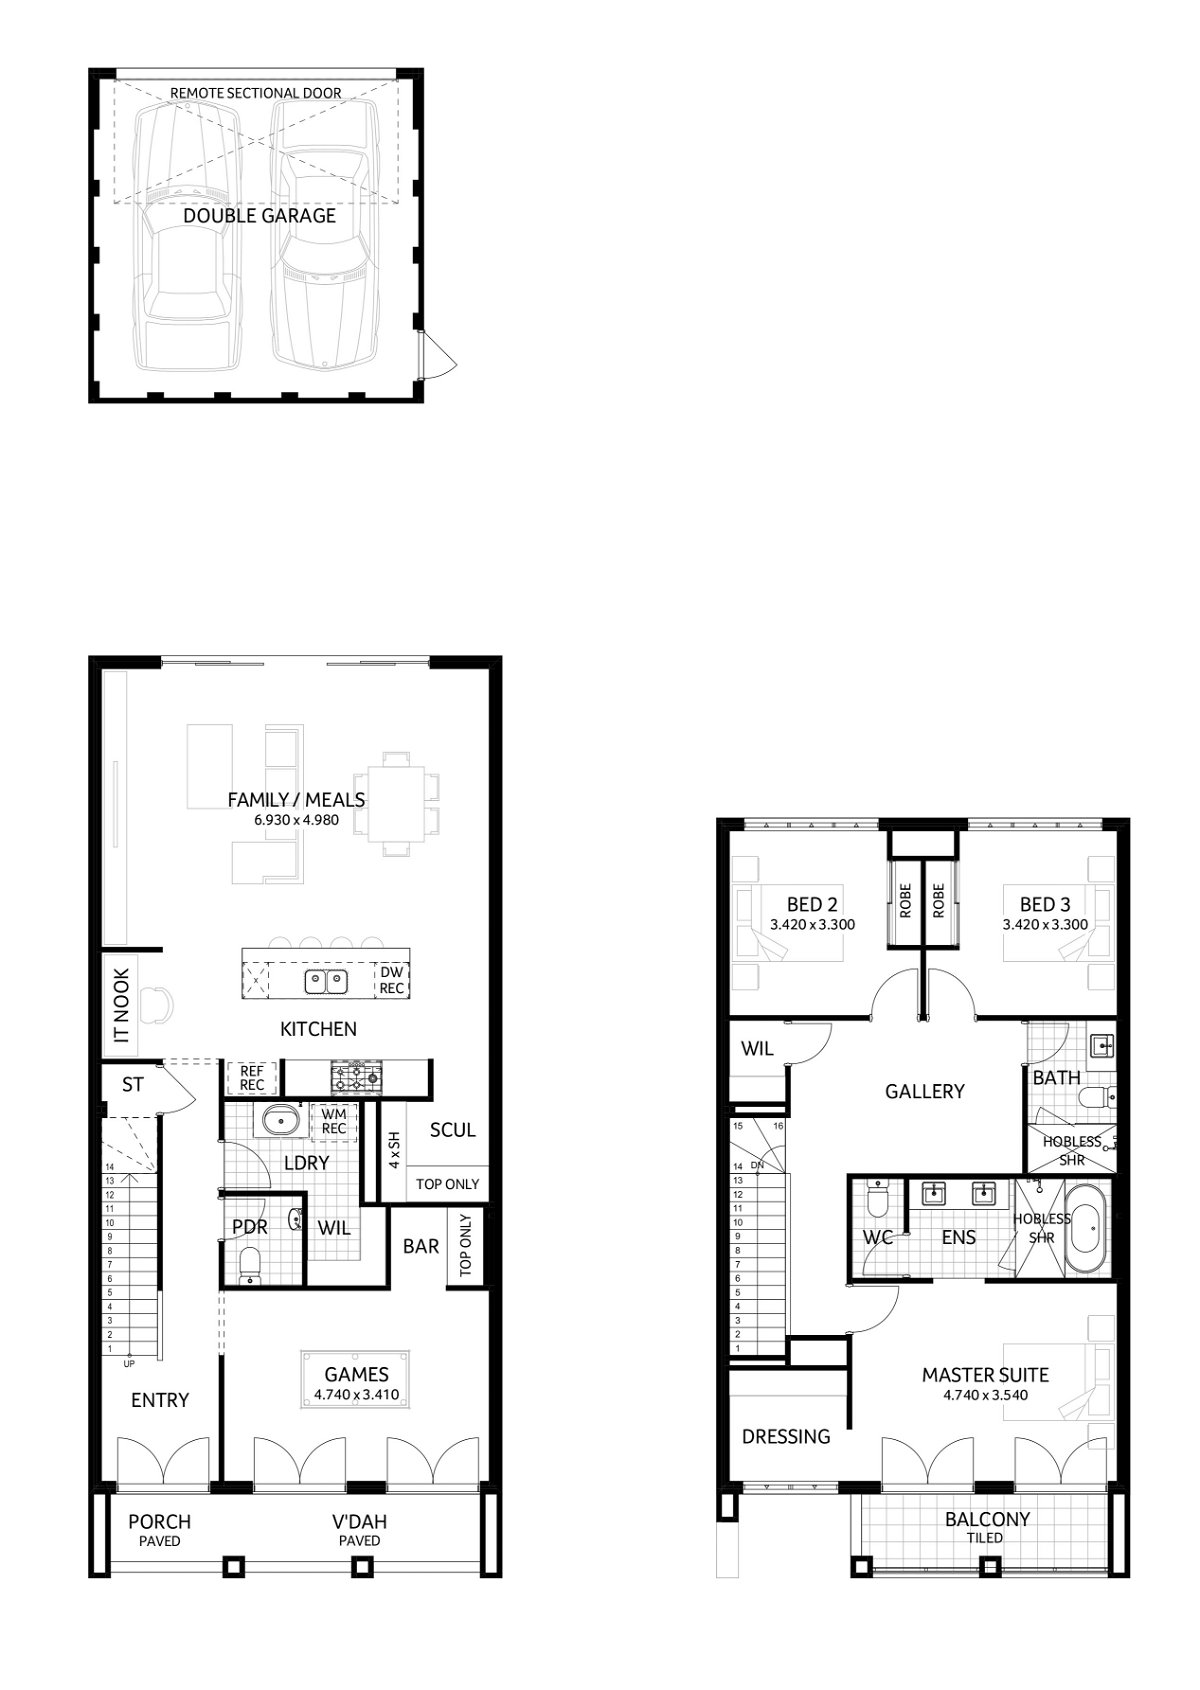 Plunkett Homes - Newcastle | Hamptons - Floorplan - Newcastle Luxe Hamptons Marketing Plan A3Jpg